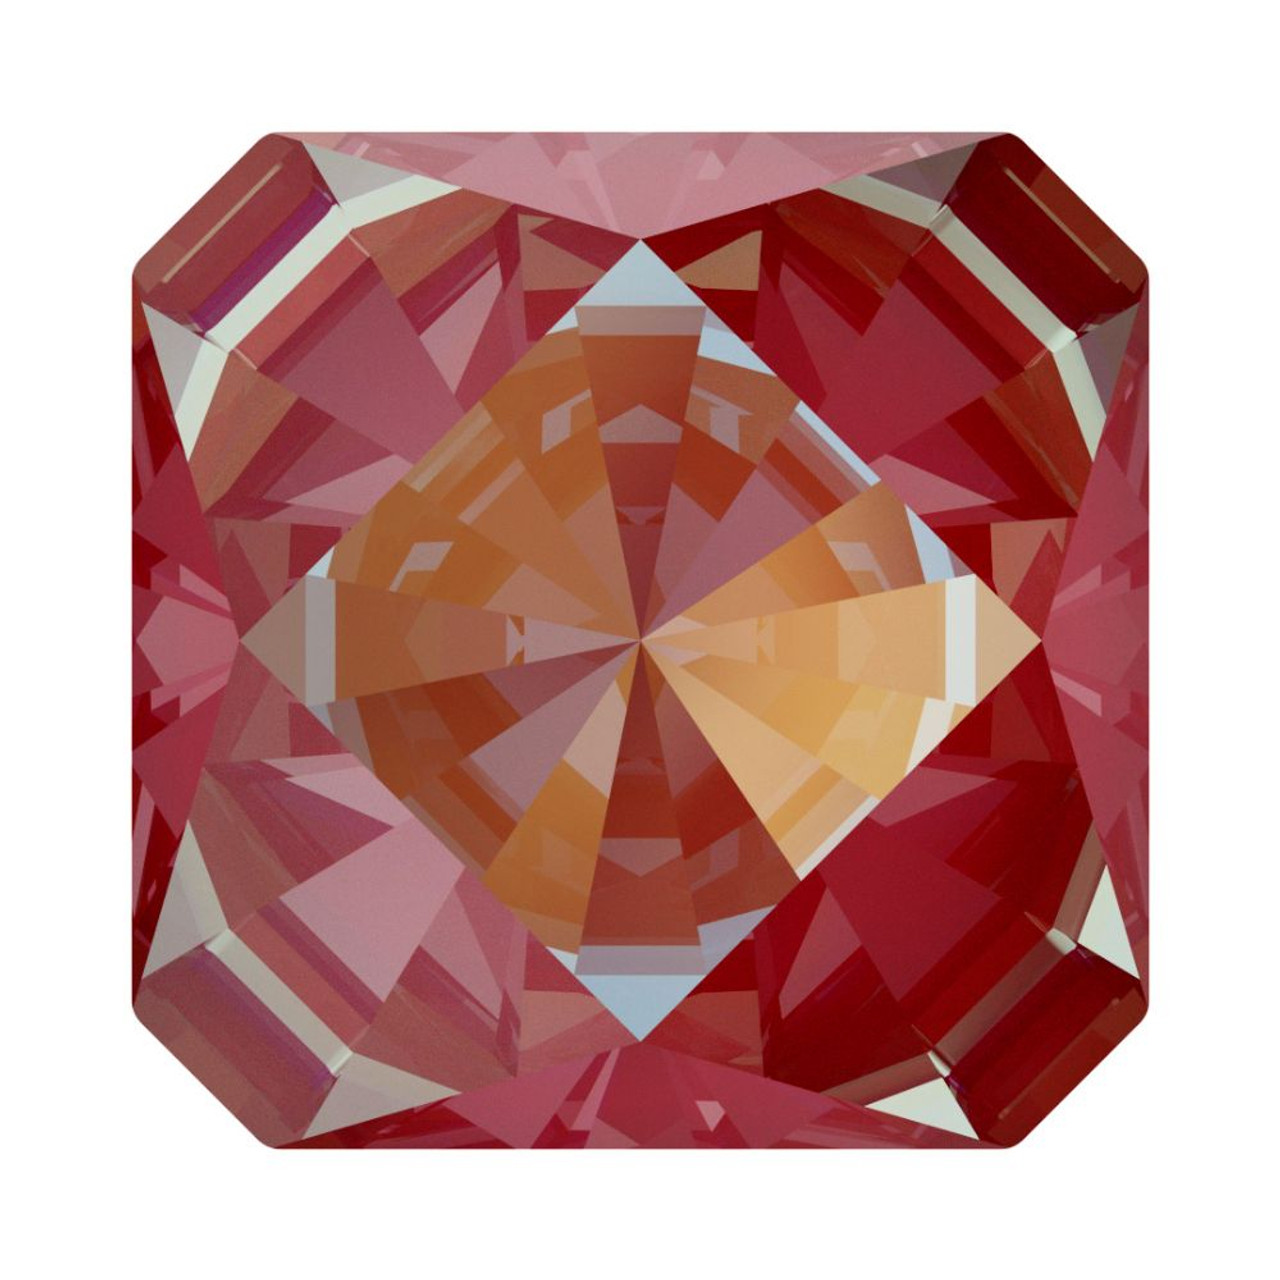 Crystal royal. Crystal Lotus Pink Delite Swarovski. Swarovski elements Rivolis 14mm Crystal Royal Red. Orange Glow Delite. Красно-оранжевый хрусталь.